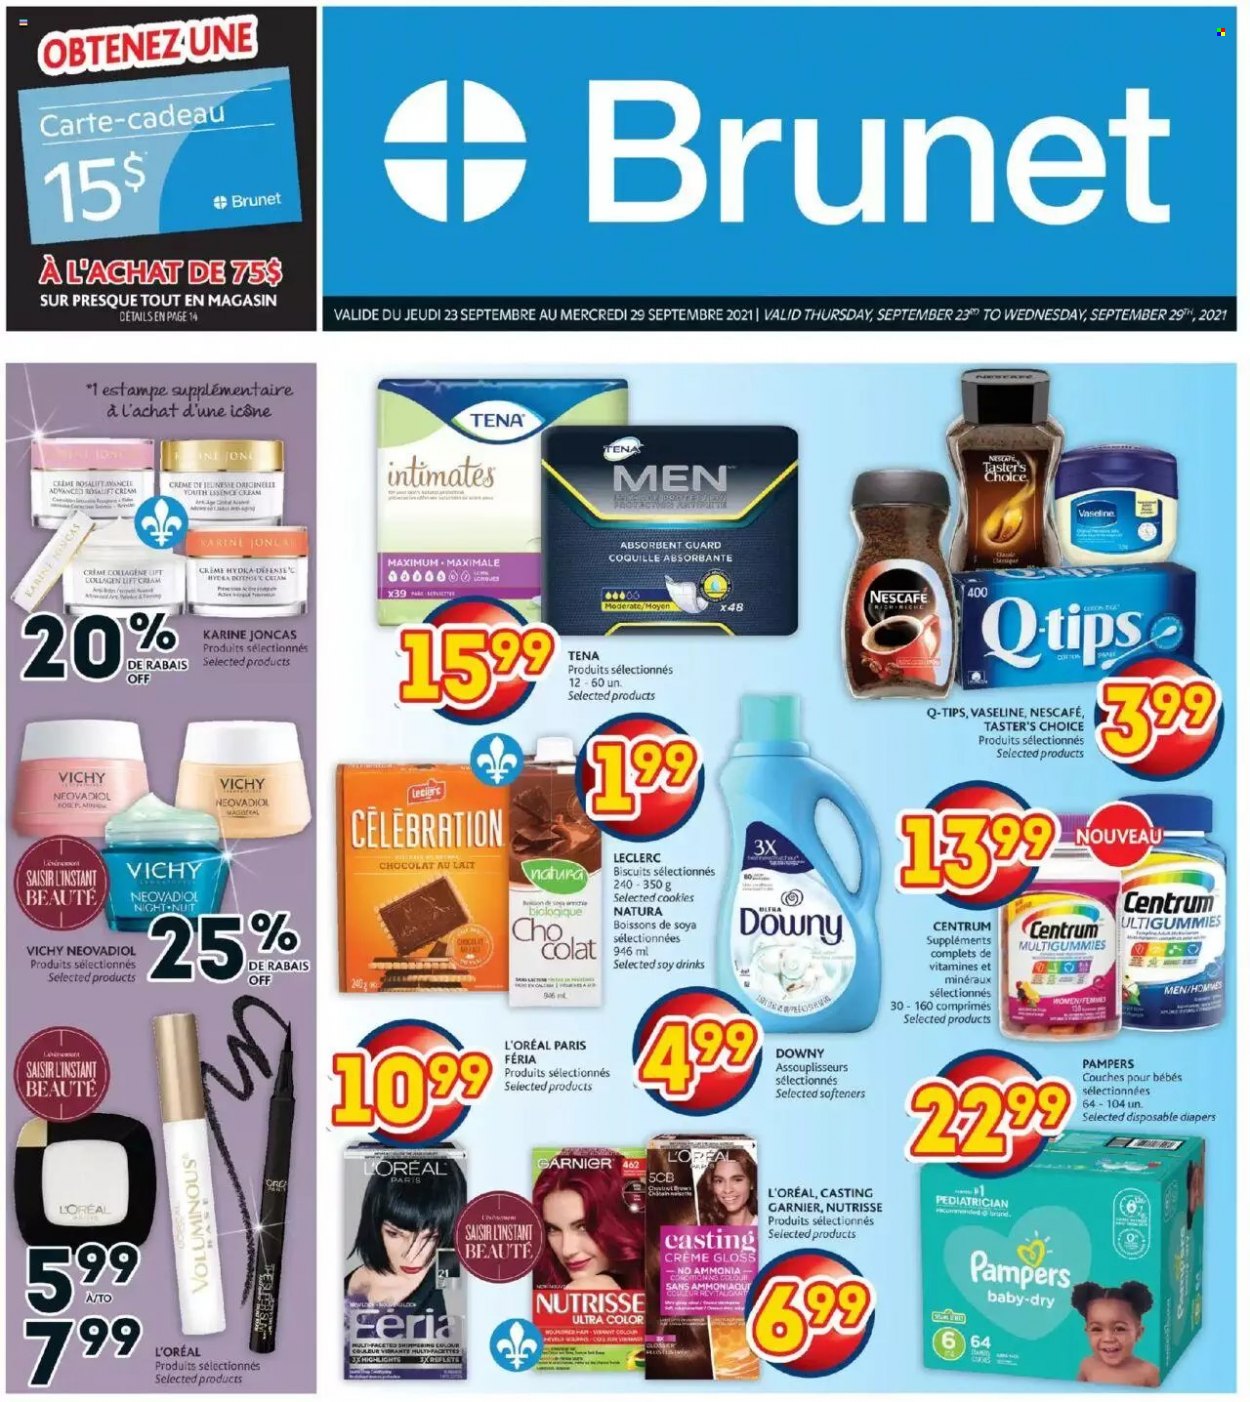 thumbnail - Brunet Flyer - September 23, 2021 - September 29, 2021 - Sales products - nappies, Vichy, Vaseline, L’Oréal, Centrum, Garnier, Pampers, Nescafé. Page 1.